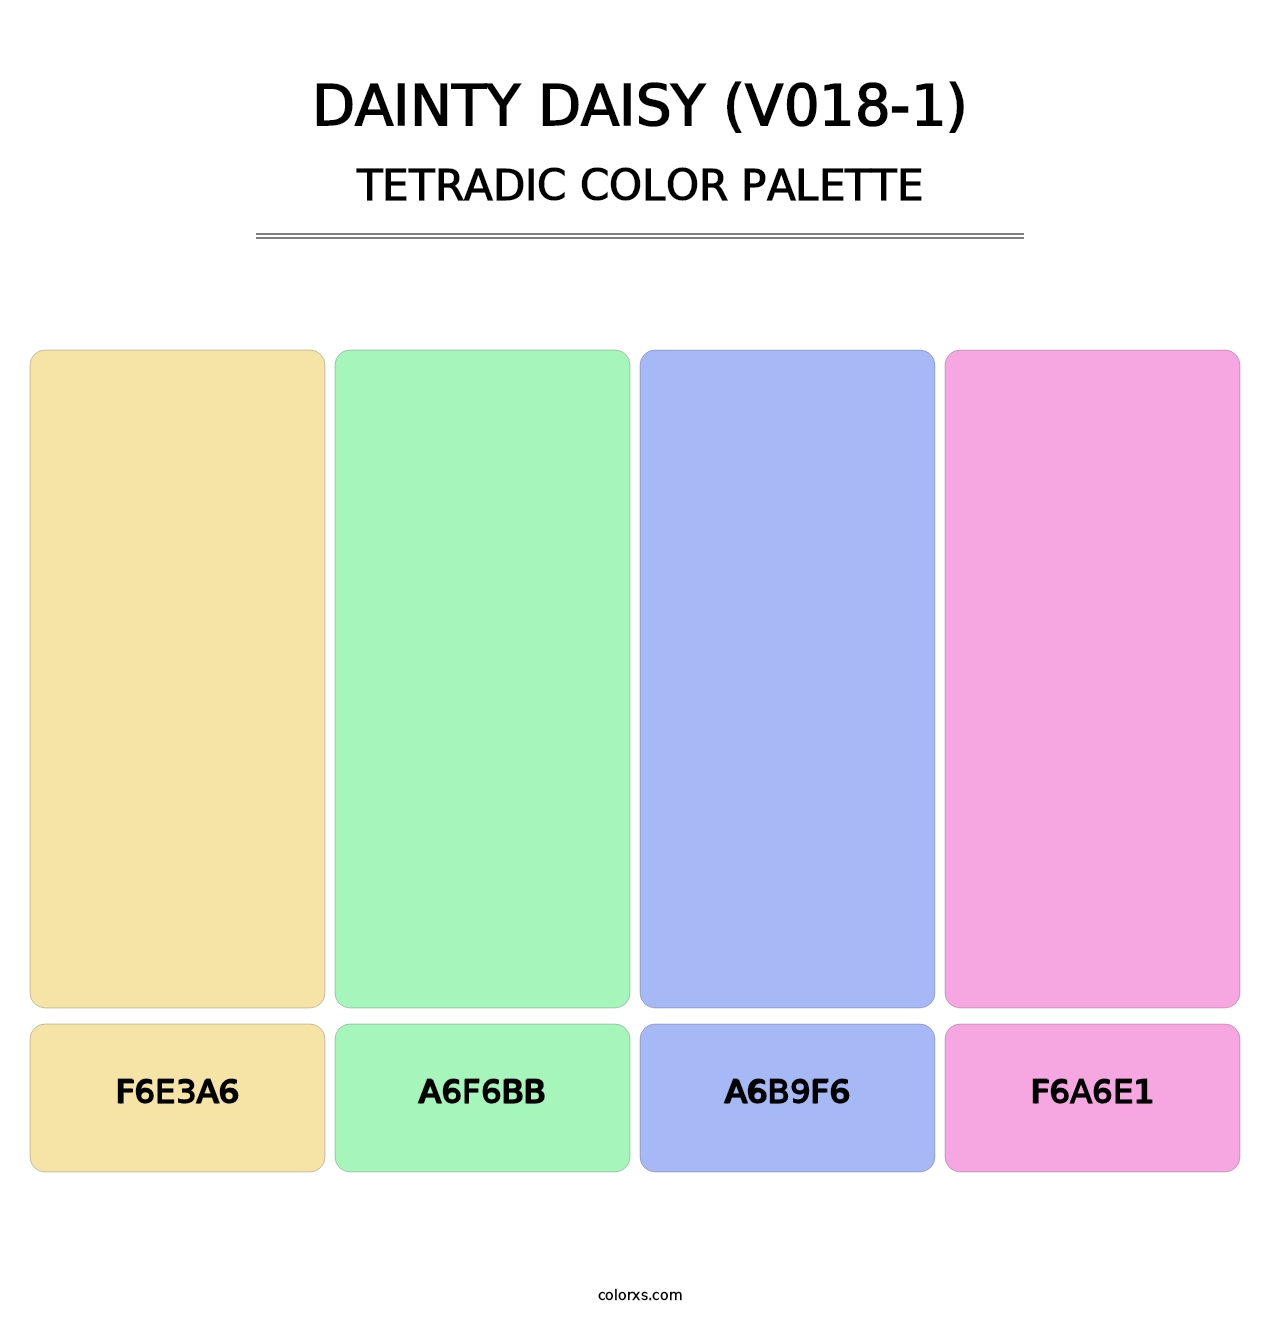 Dainty Daisy (V018-1) - Tetradic Color Palette